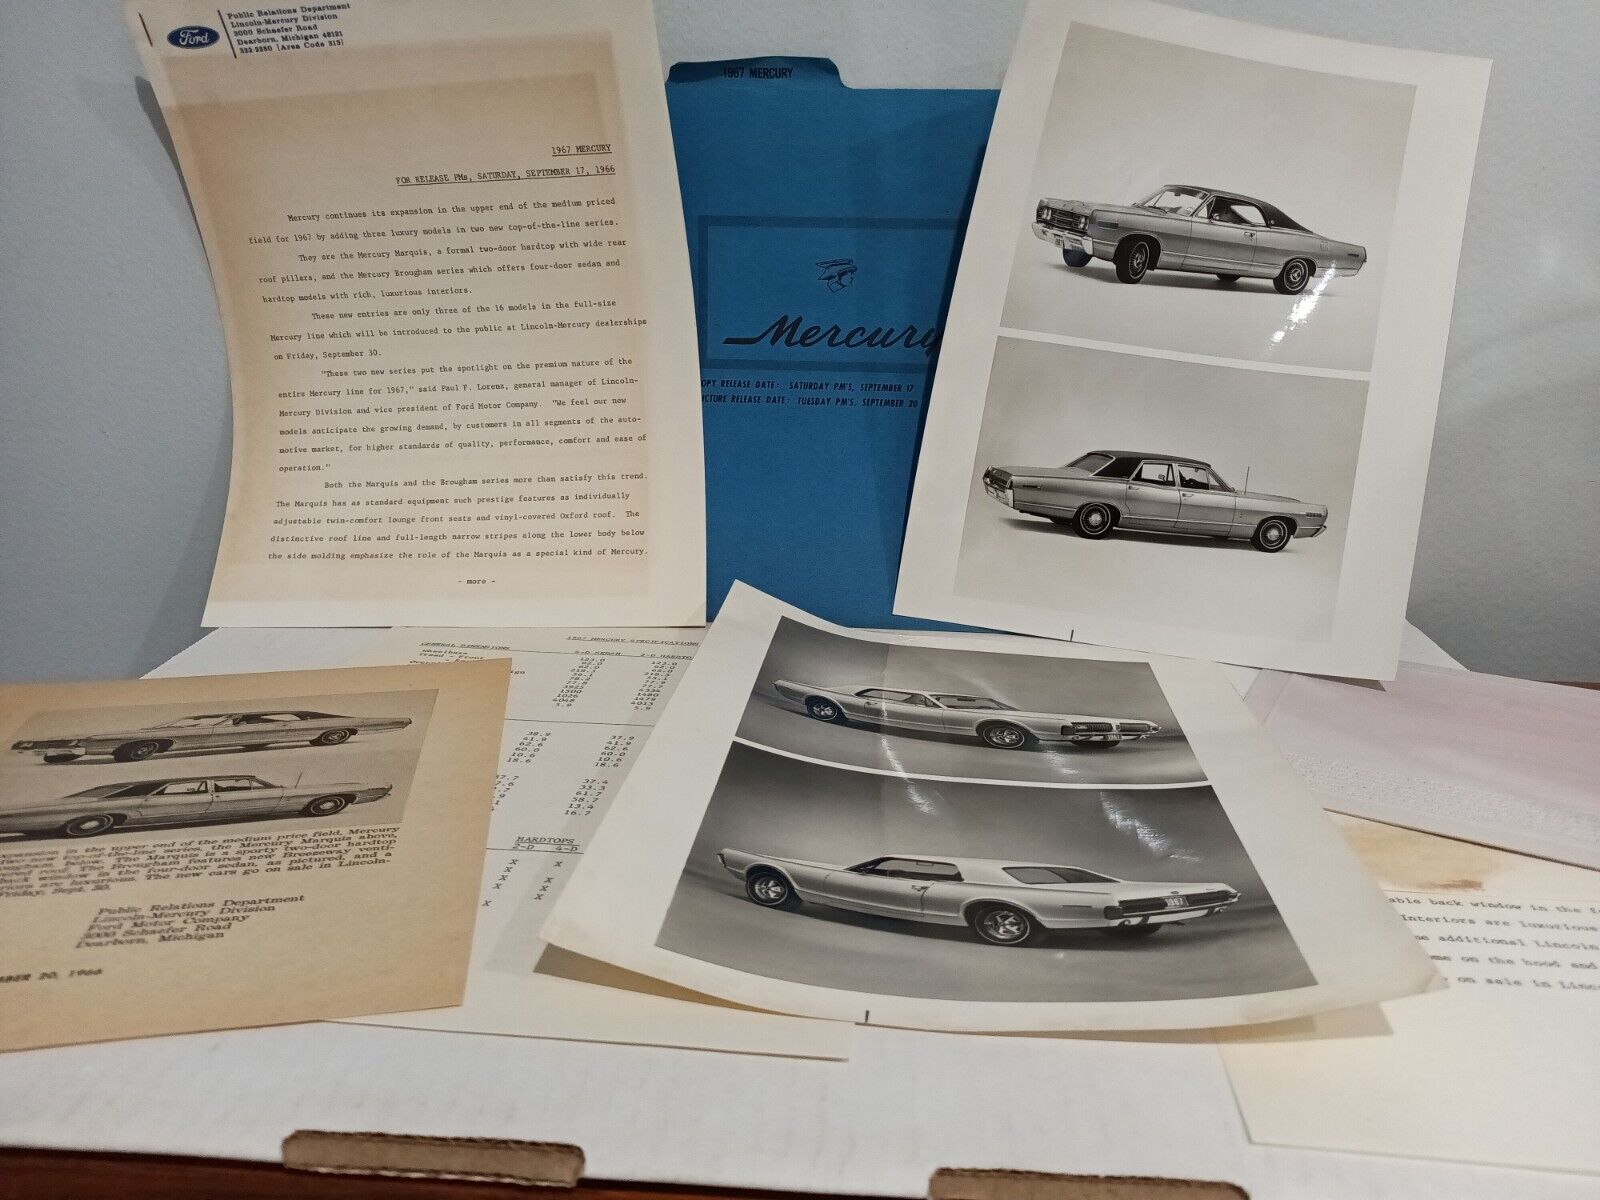 1967 Plymouth Marquis Brougham B&W Pictures & Press Release Folder 1966 Ephemera